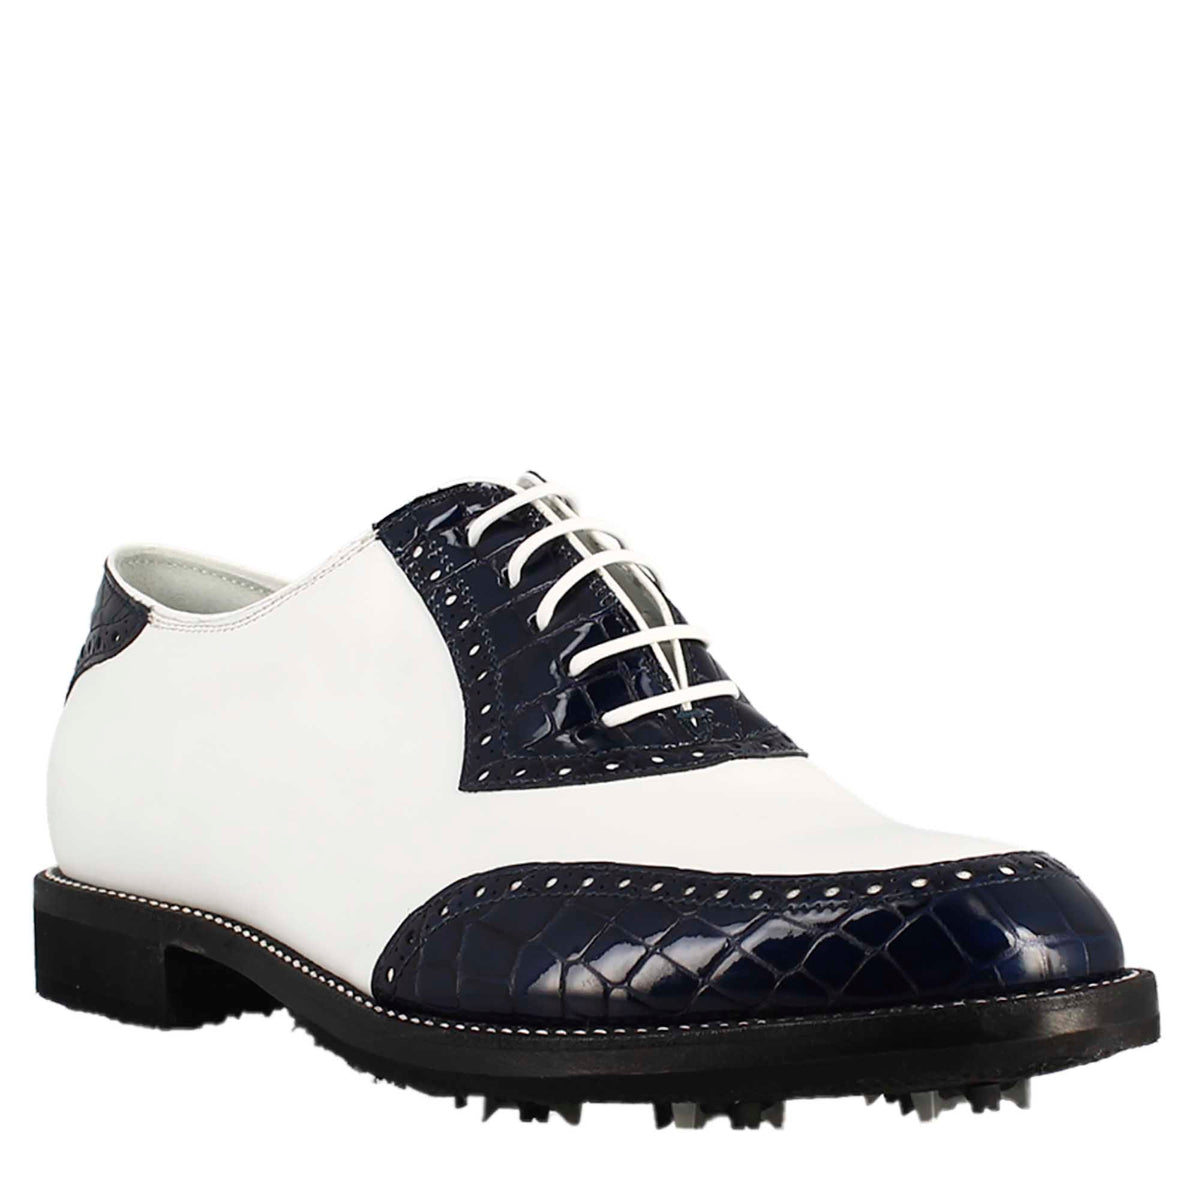 Handmade women's golf shoes in white crocodile blue full-grain leather